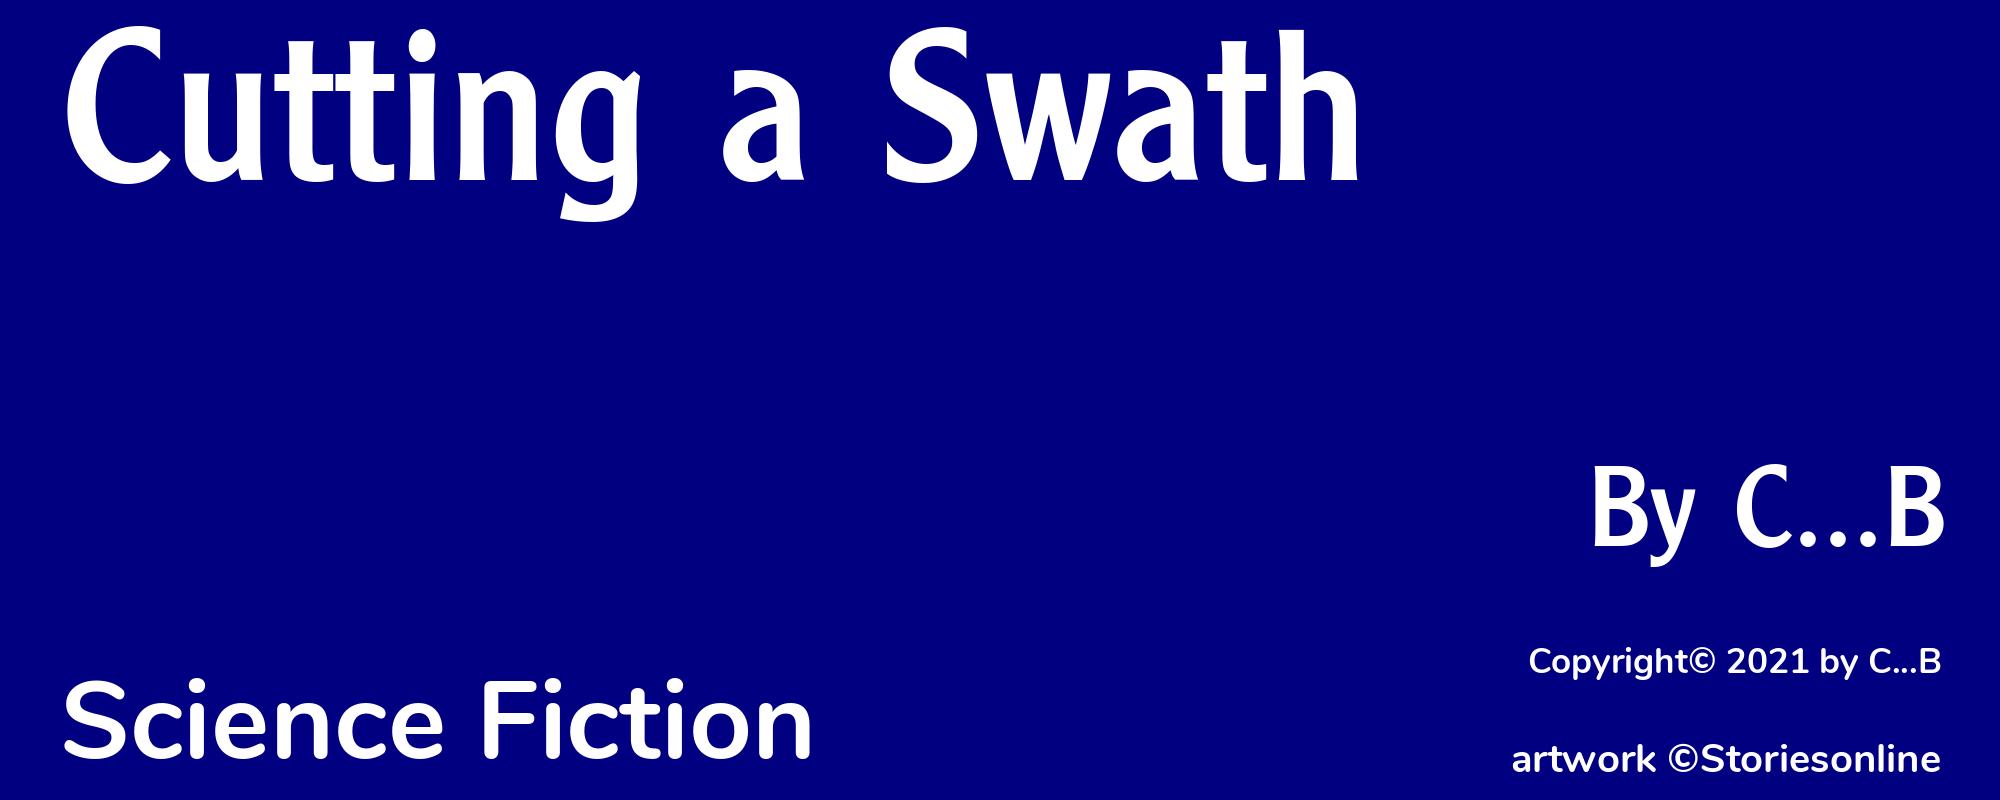 Cutting a Swath - Cover